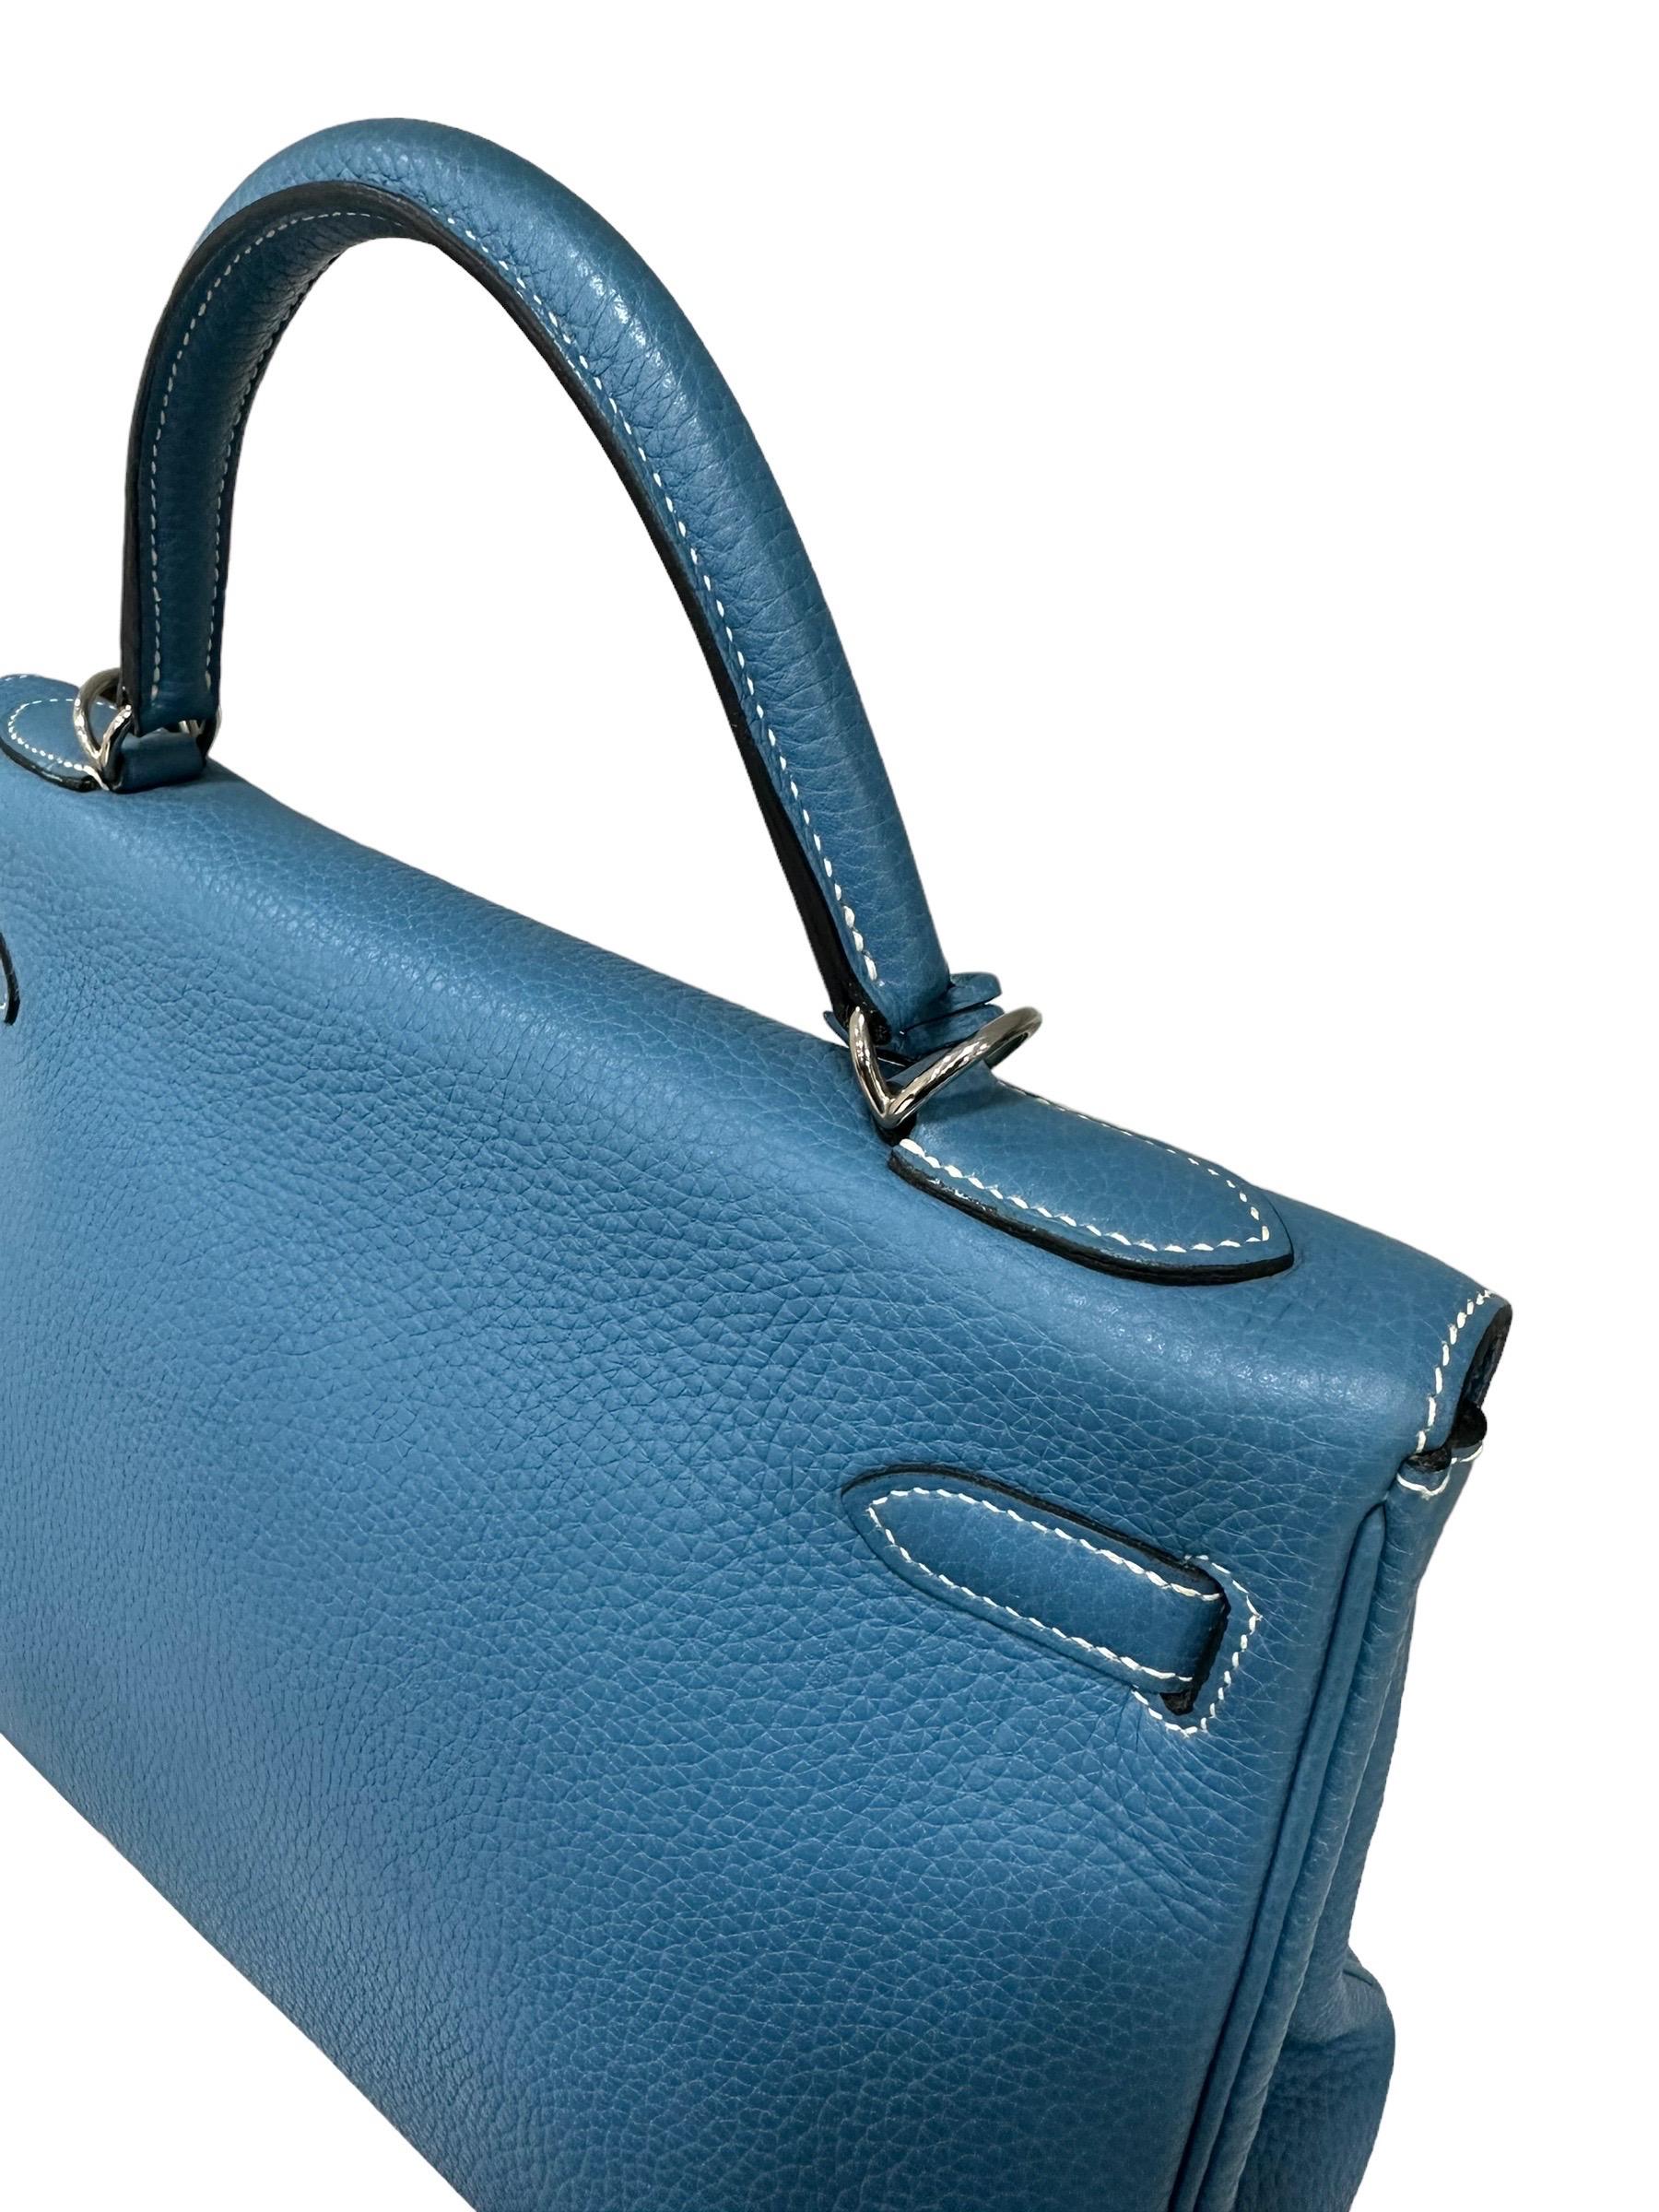 Hermès Kelly Bag 32 Clemence Leather Blue Izmir Top Handle Bag For Sale 1